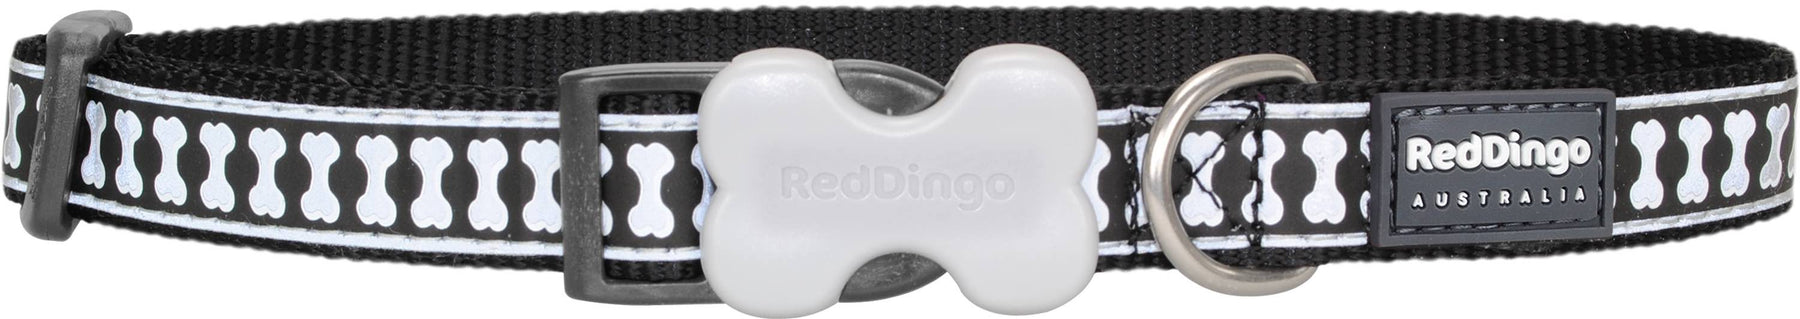 Red Dingo Reflective Black Dog Collar